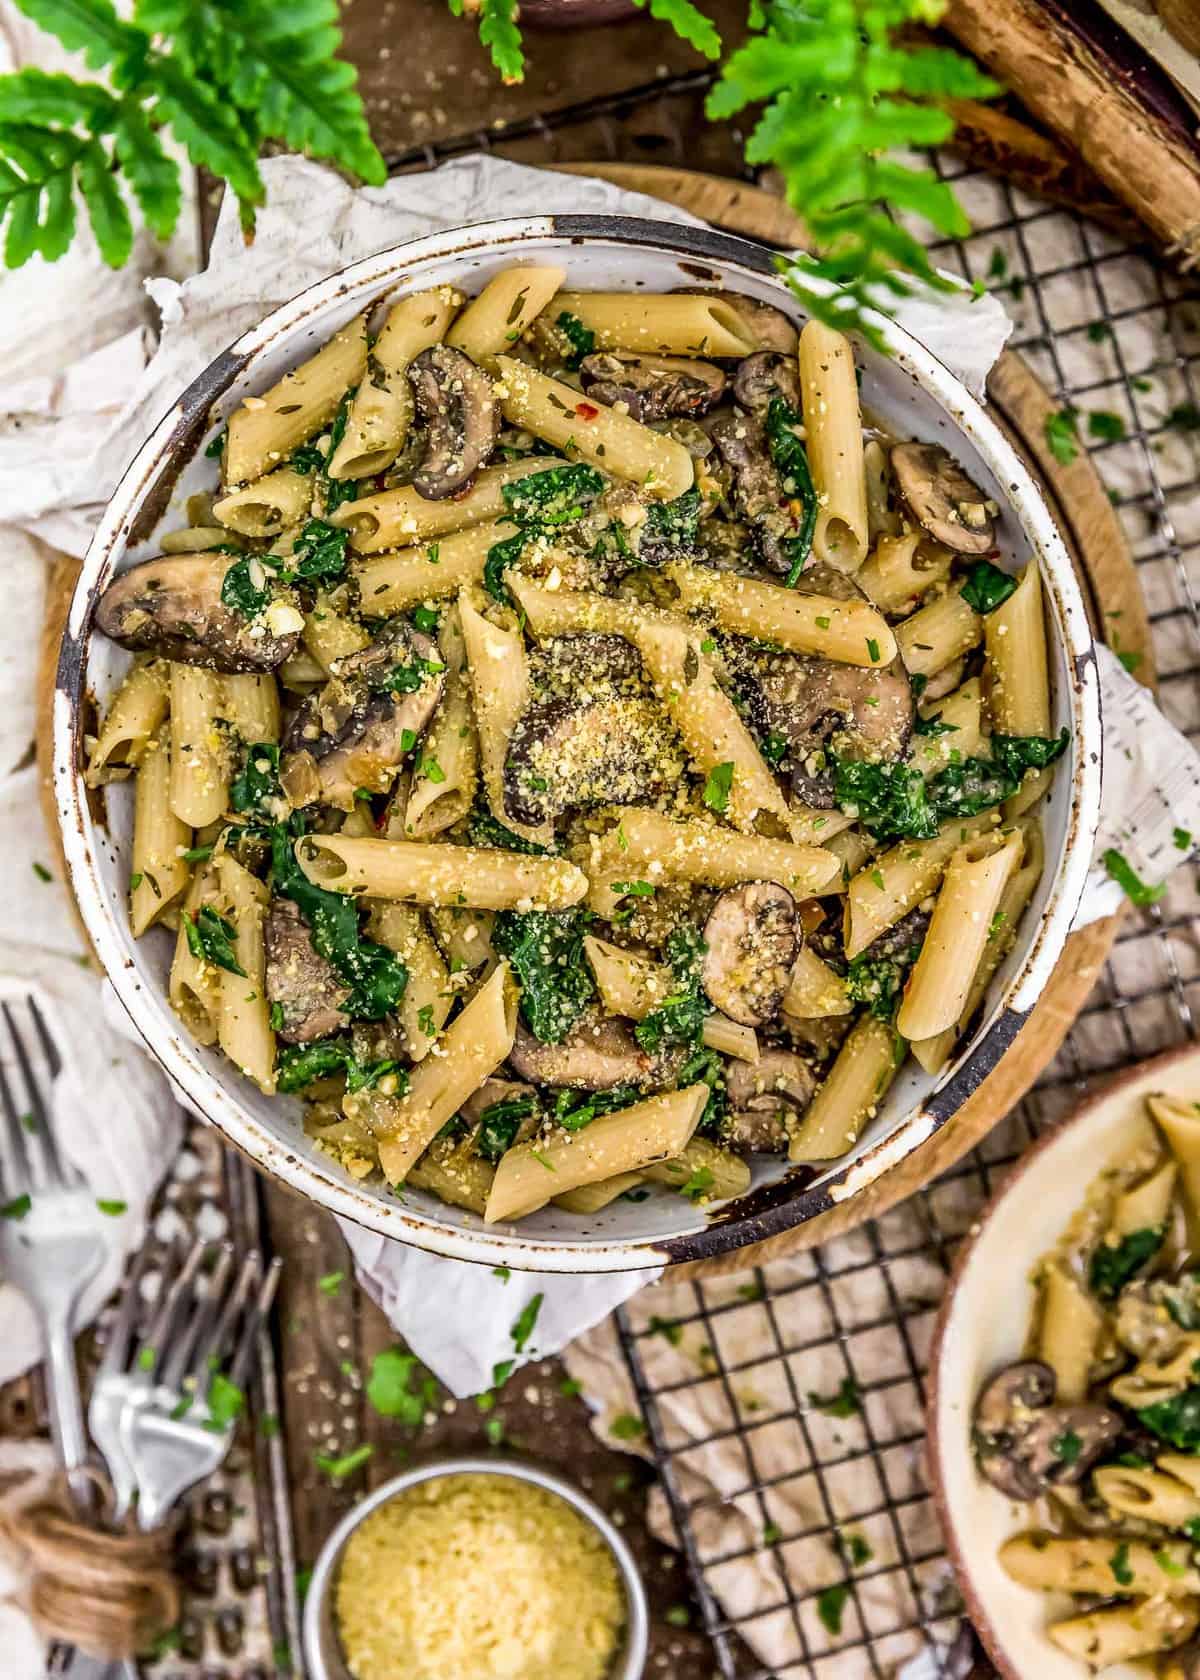 Bowl of Vegan “Sausage” Mushroom Pasta